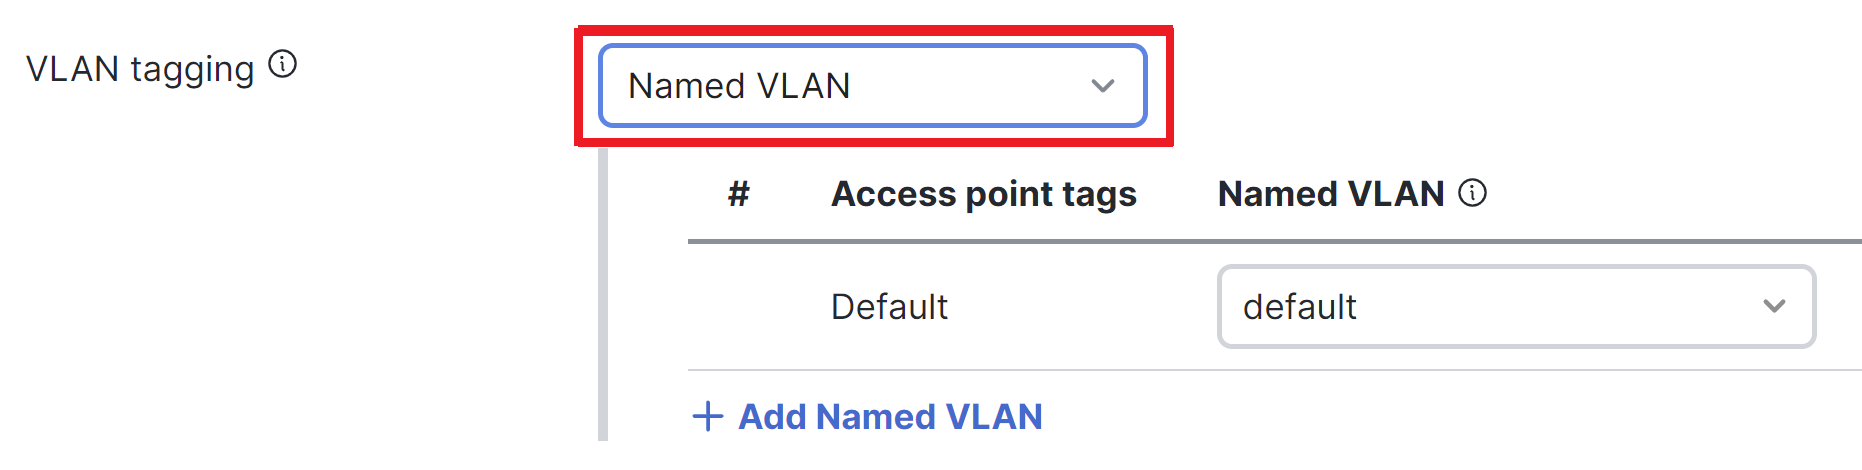 SSID VLAN tagging by VLAN name option